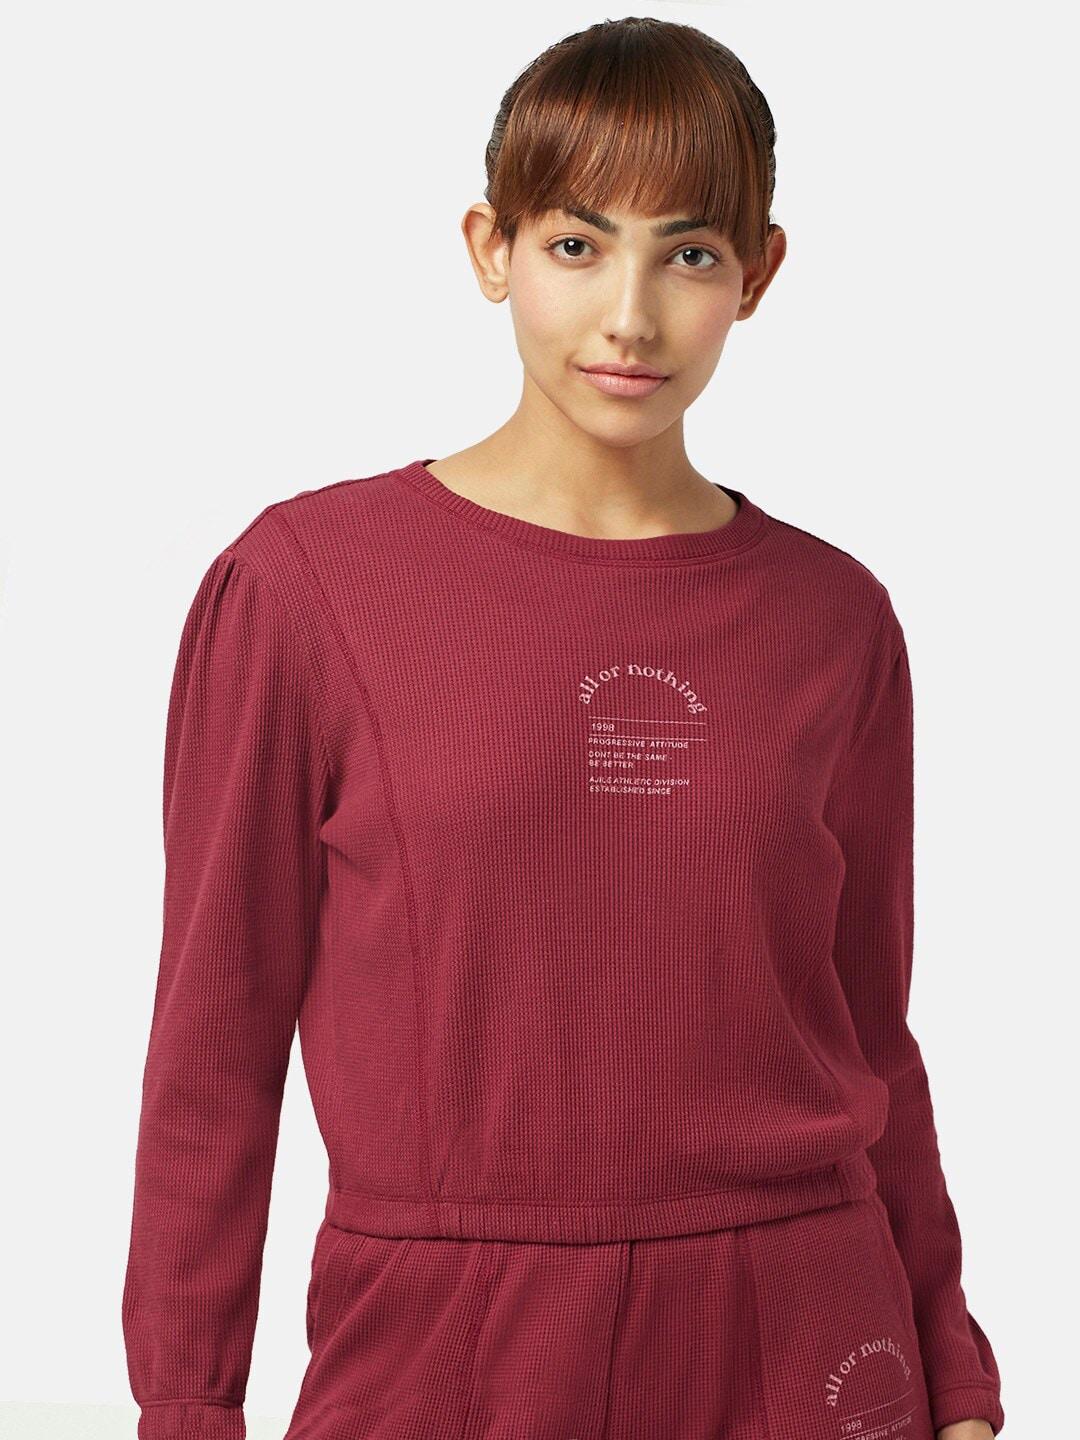 ajile-by-pantaloons-women-cotton-typography-printed-t-shirt